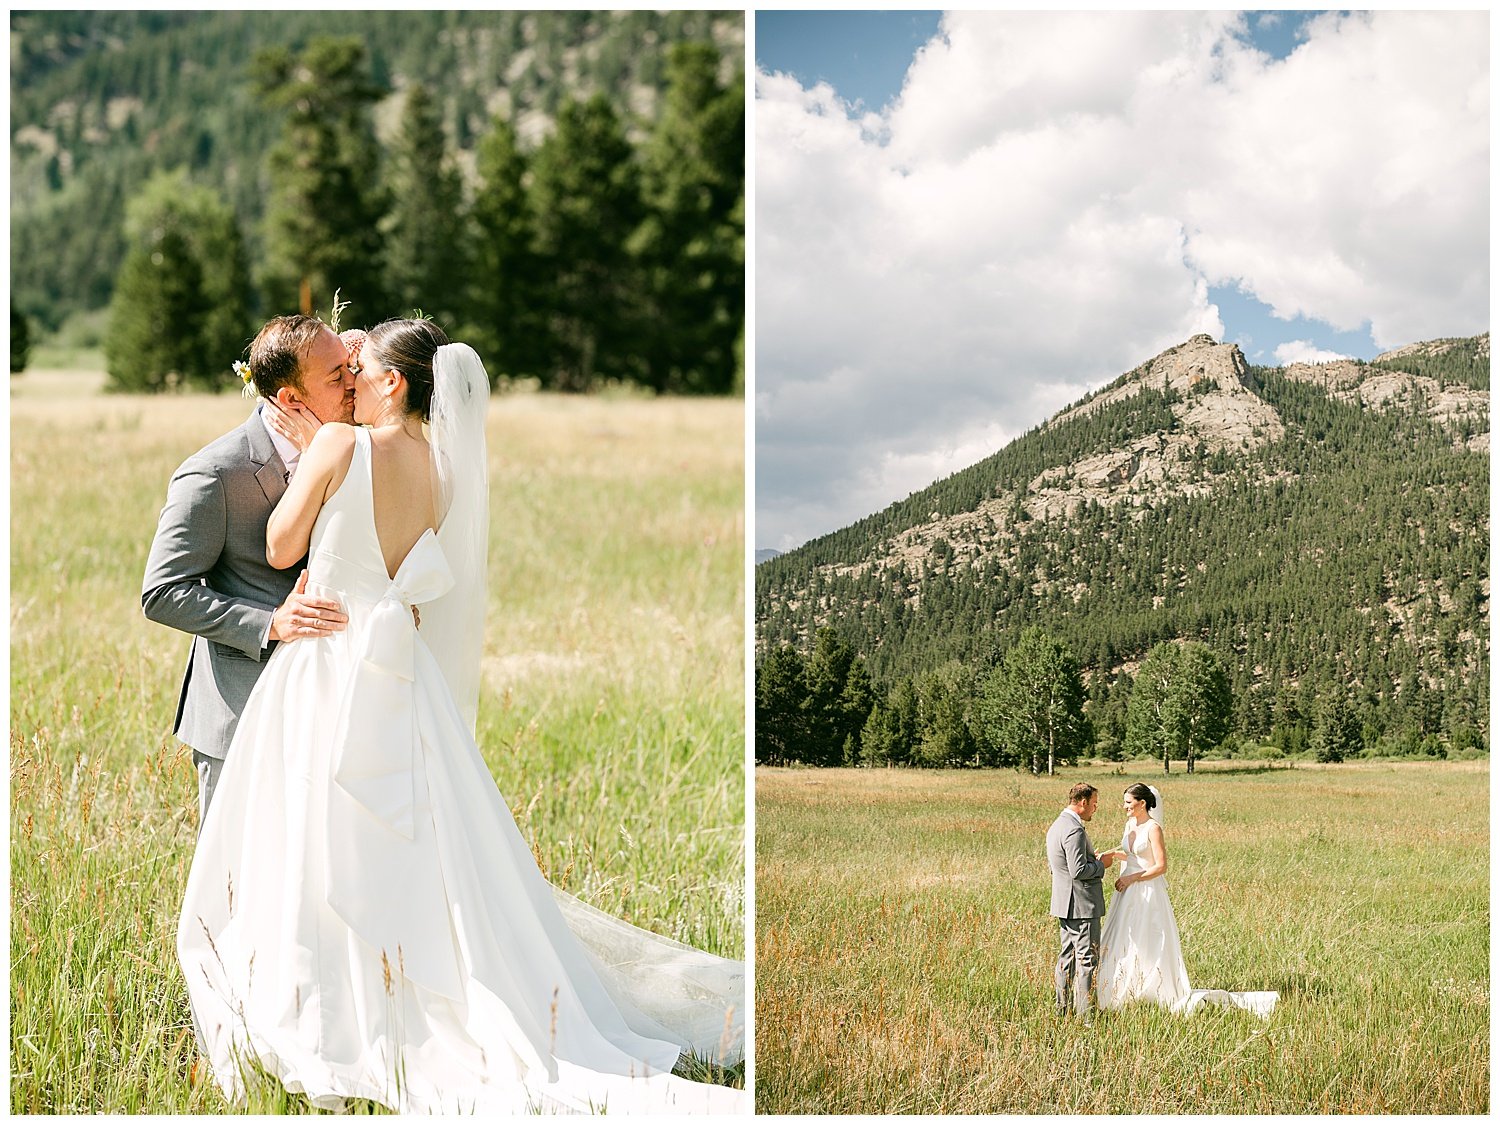 Rocky-Mountain-National-Park-Wedding-Photography-Apollo-Fields-20.jpg